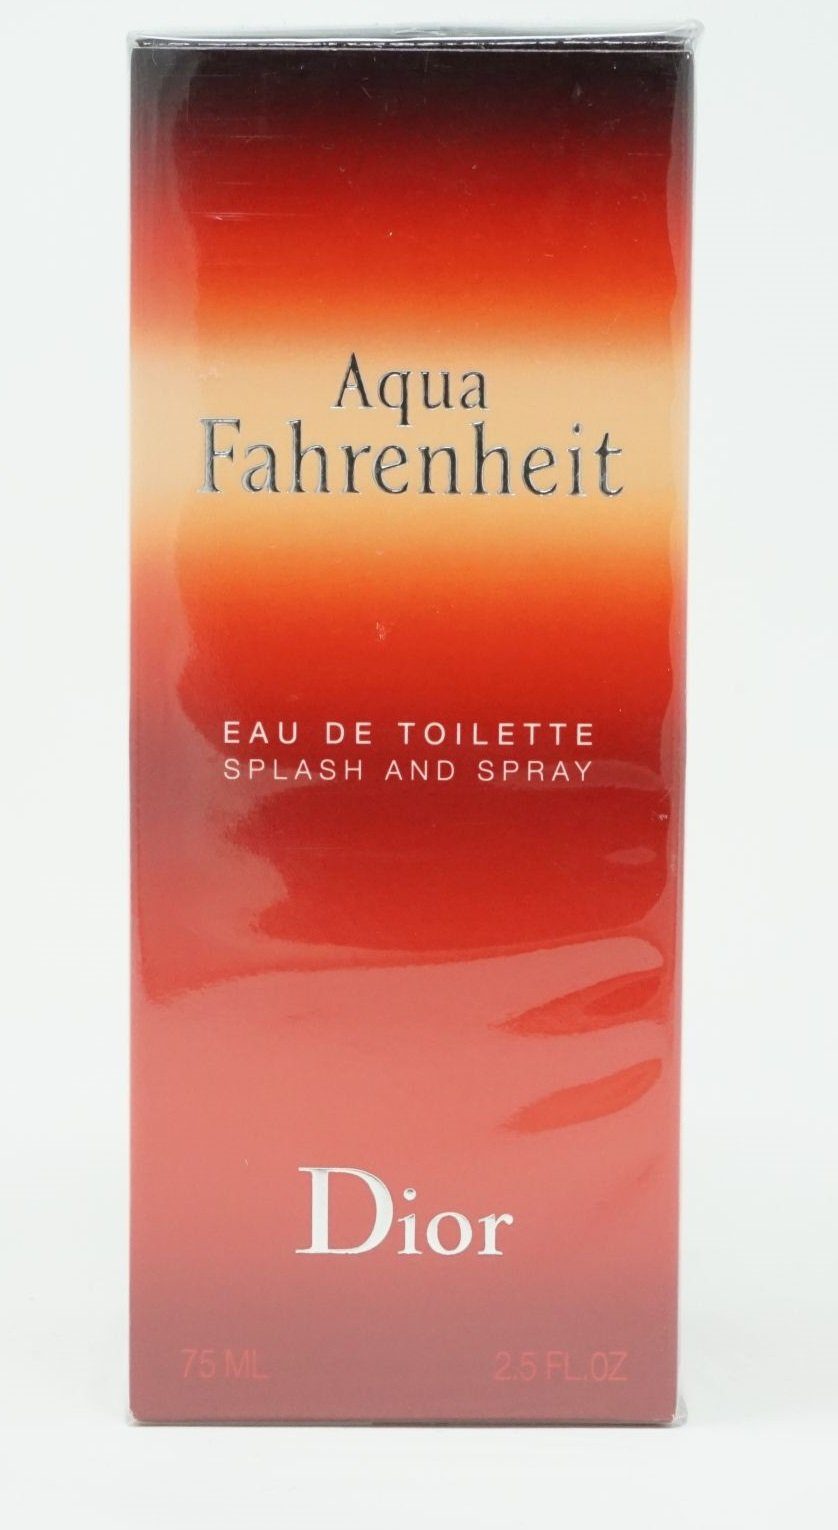 Spray Toilette Dior Splash 75ml Fahrenheit Dior and Toilette Eau de de Aqua Eau